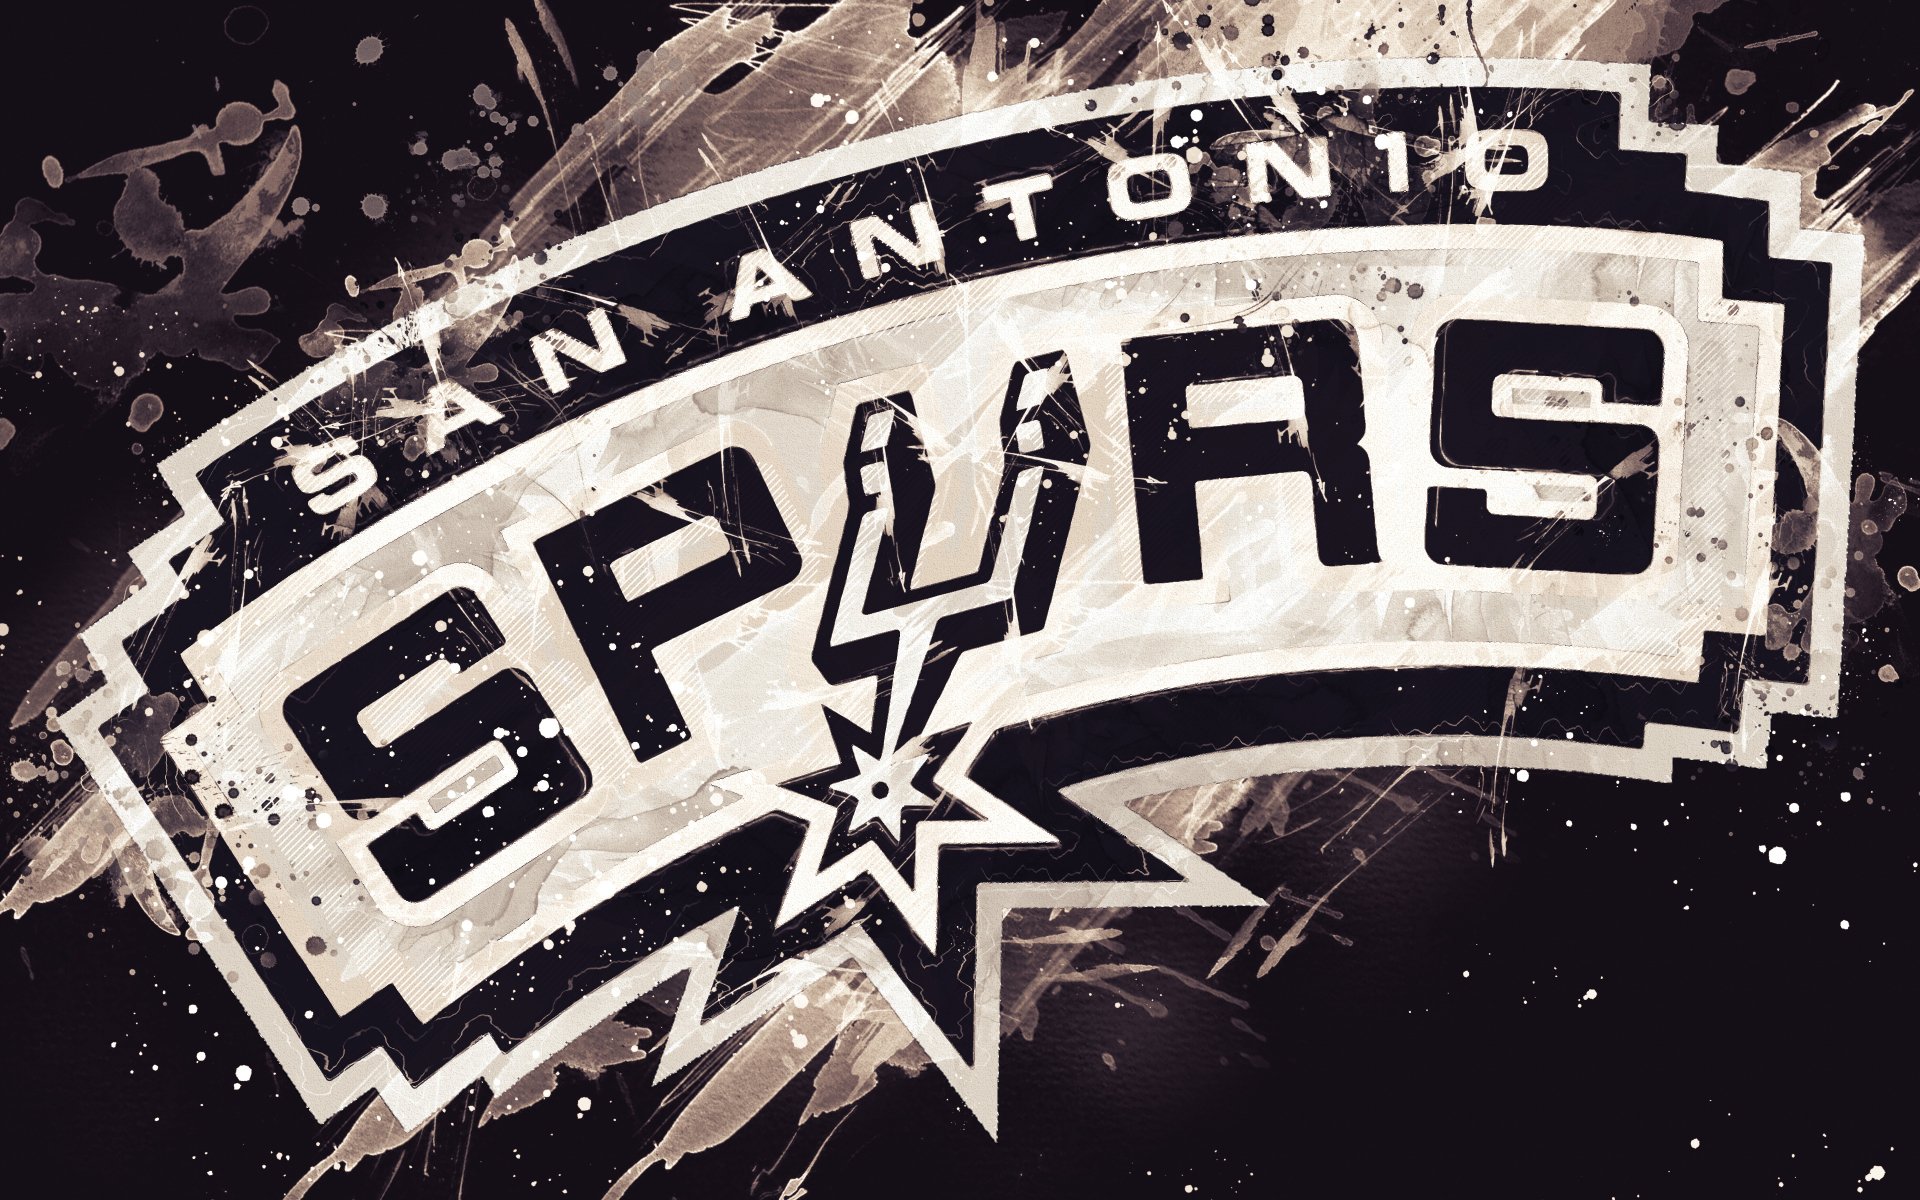 San Antonio Spurs Wallpapers